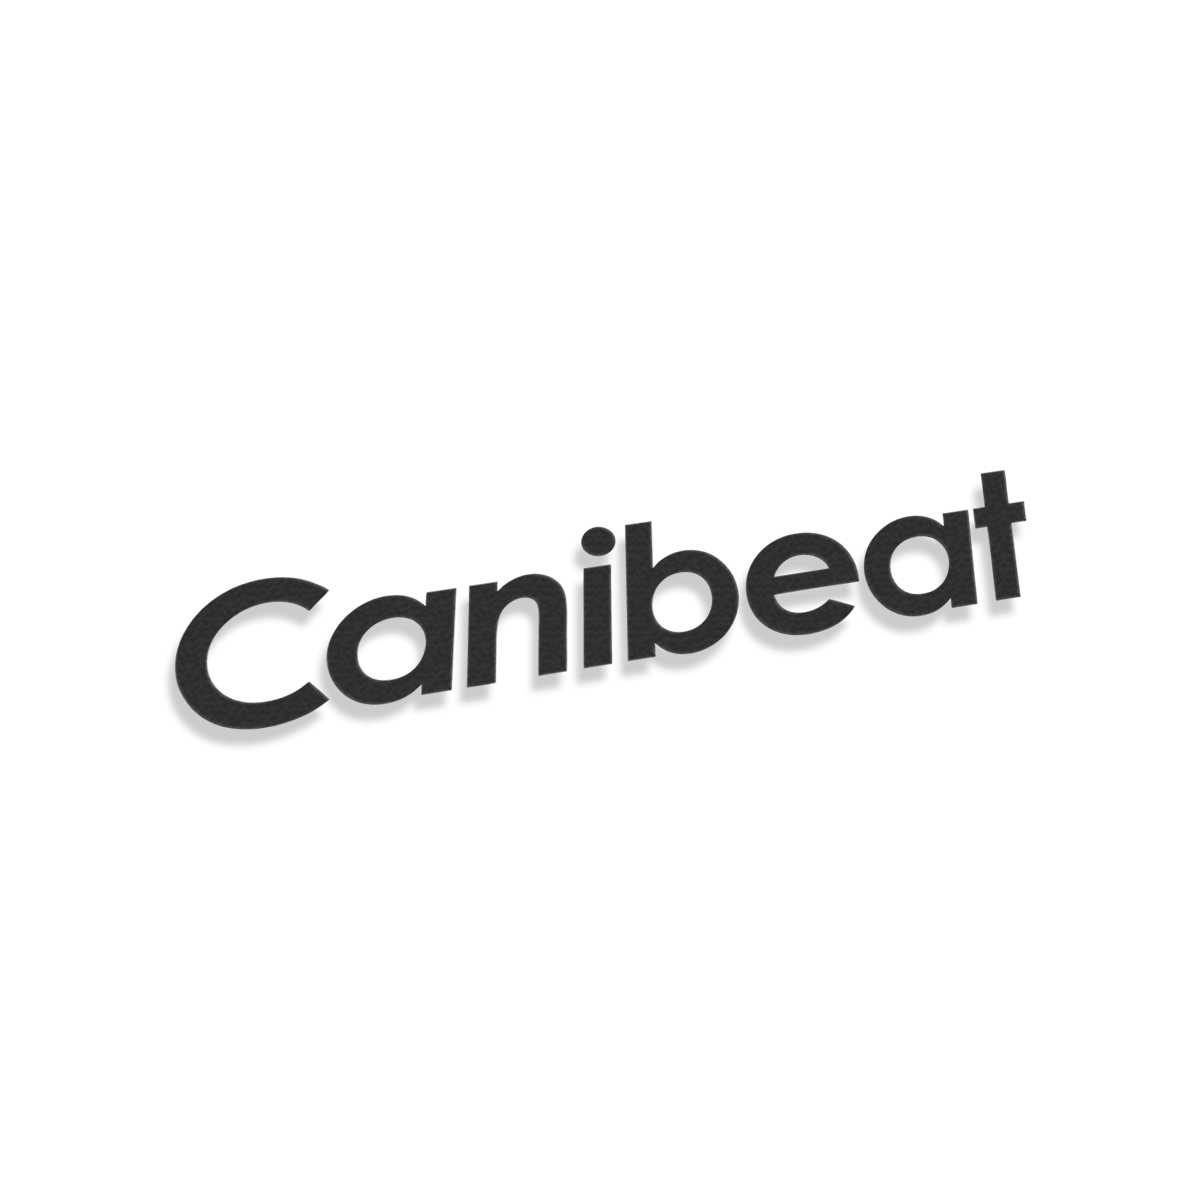 canibeat logo wallpaper